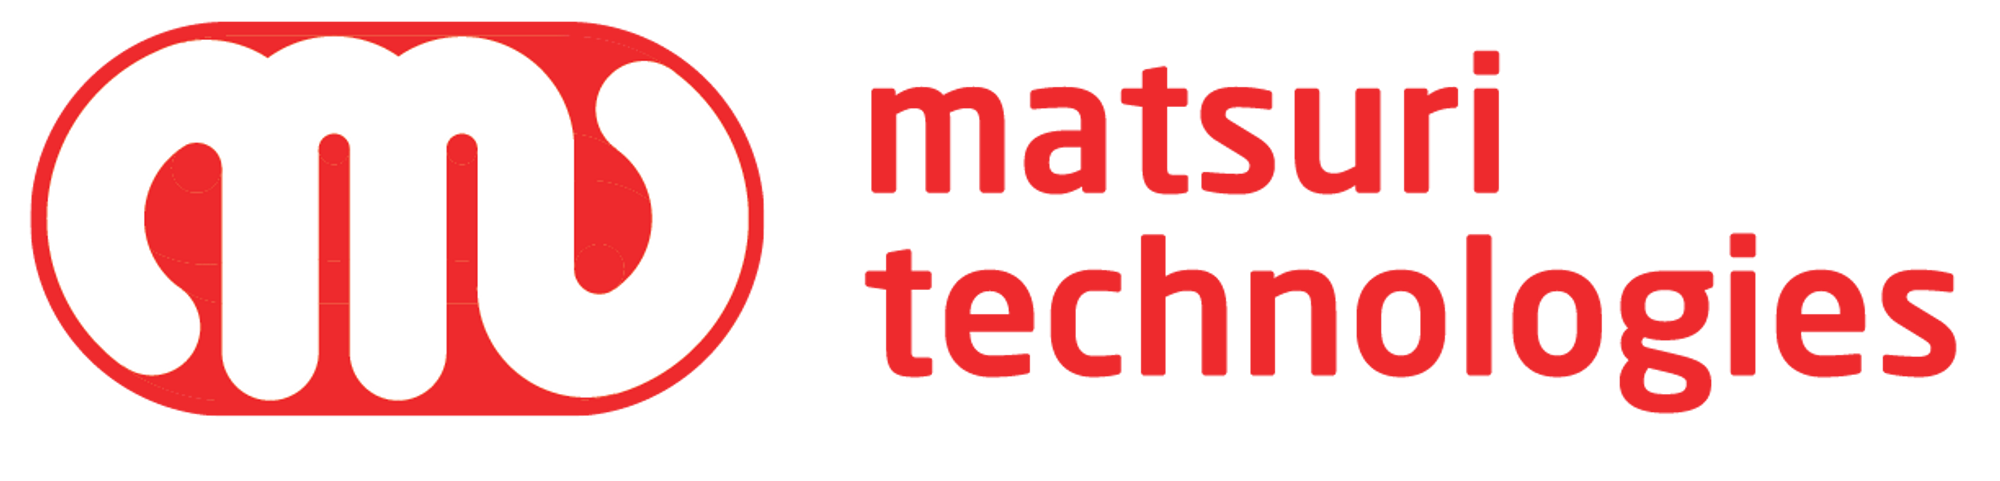 matsuri technologies 株式会社の企業ロゴ